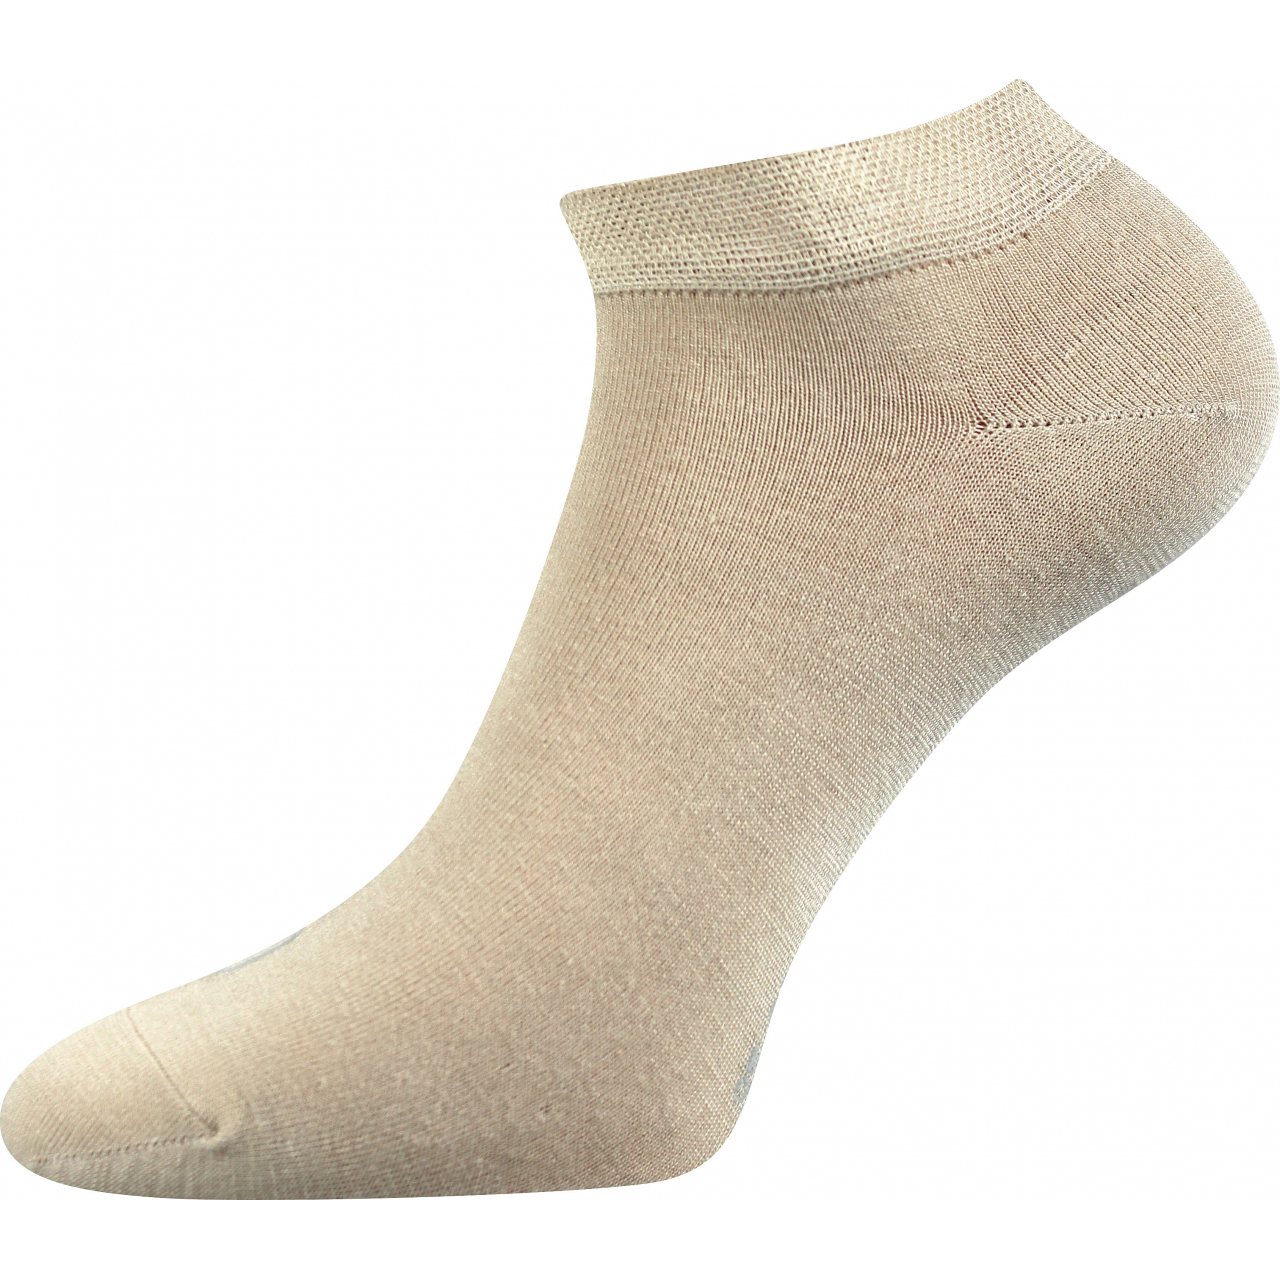 Ponožky unisex klasické Lonka Esi - béžové, 35-38